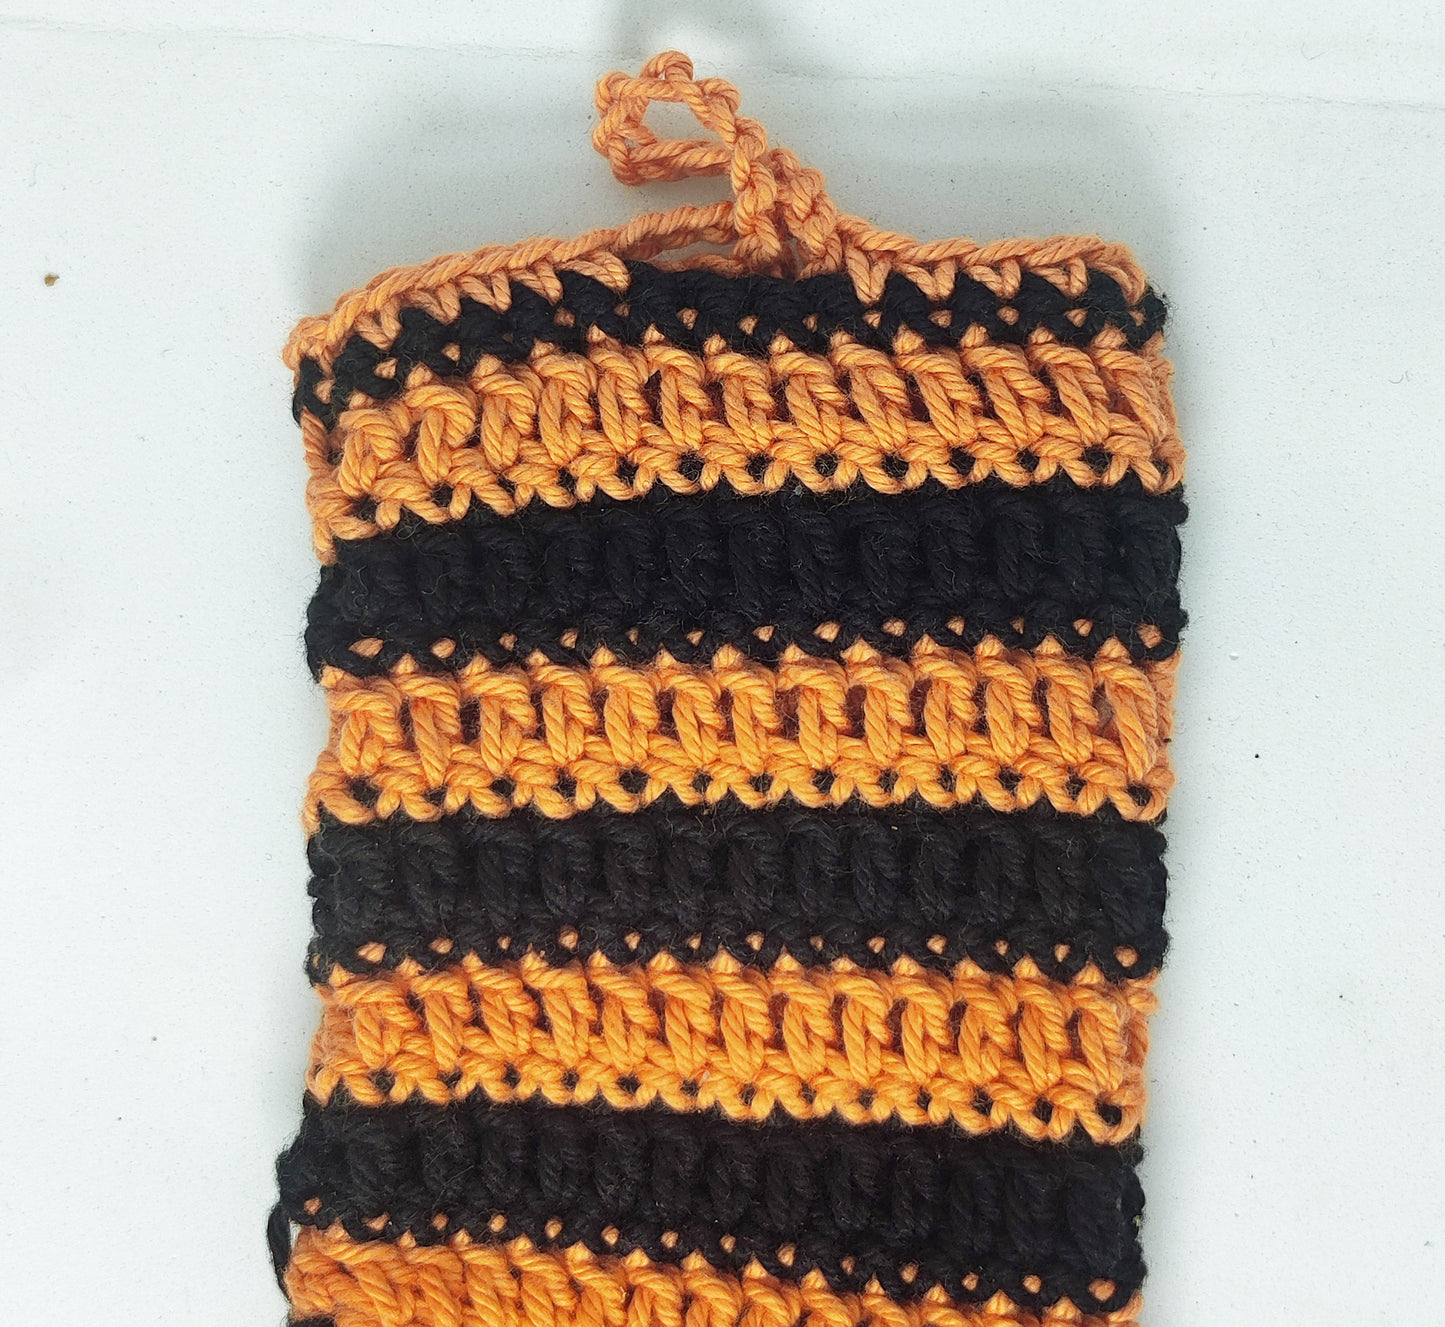 Black and Orange Crochet Soap Rag Bag